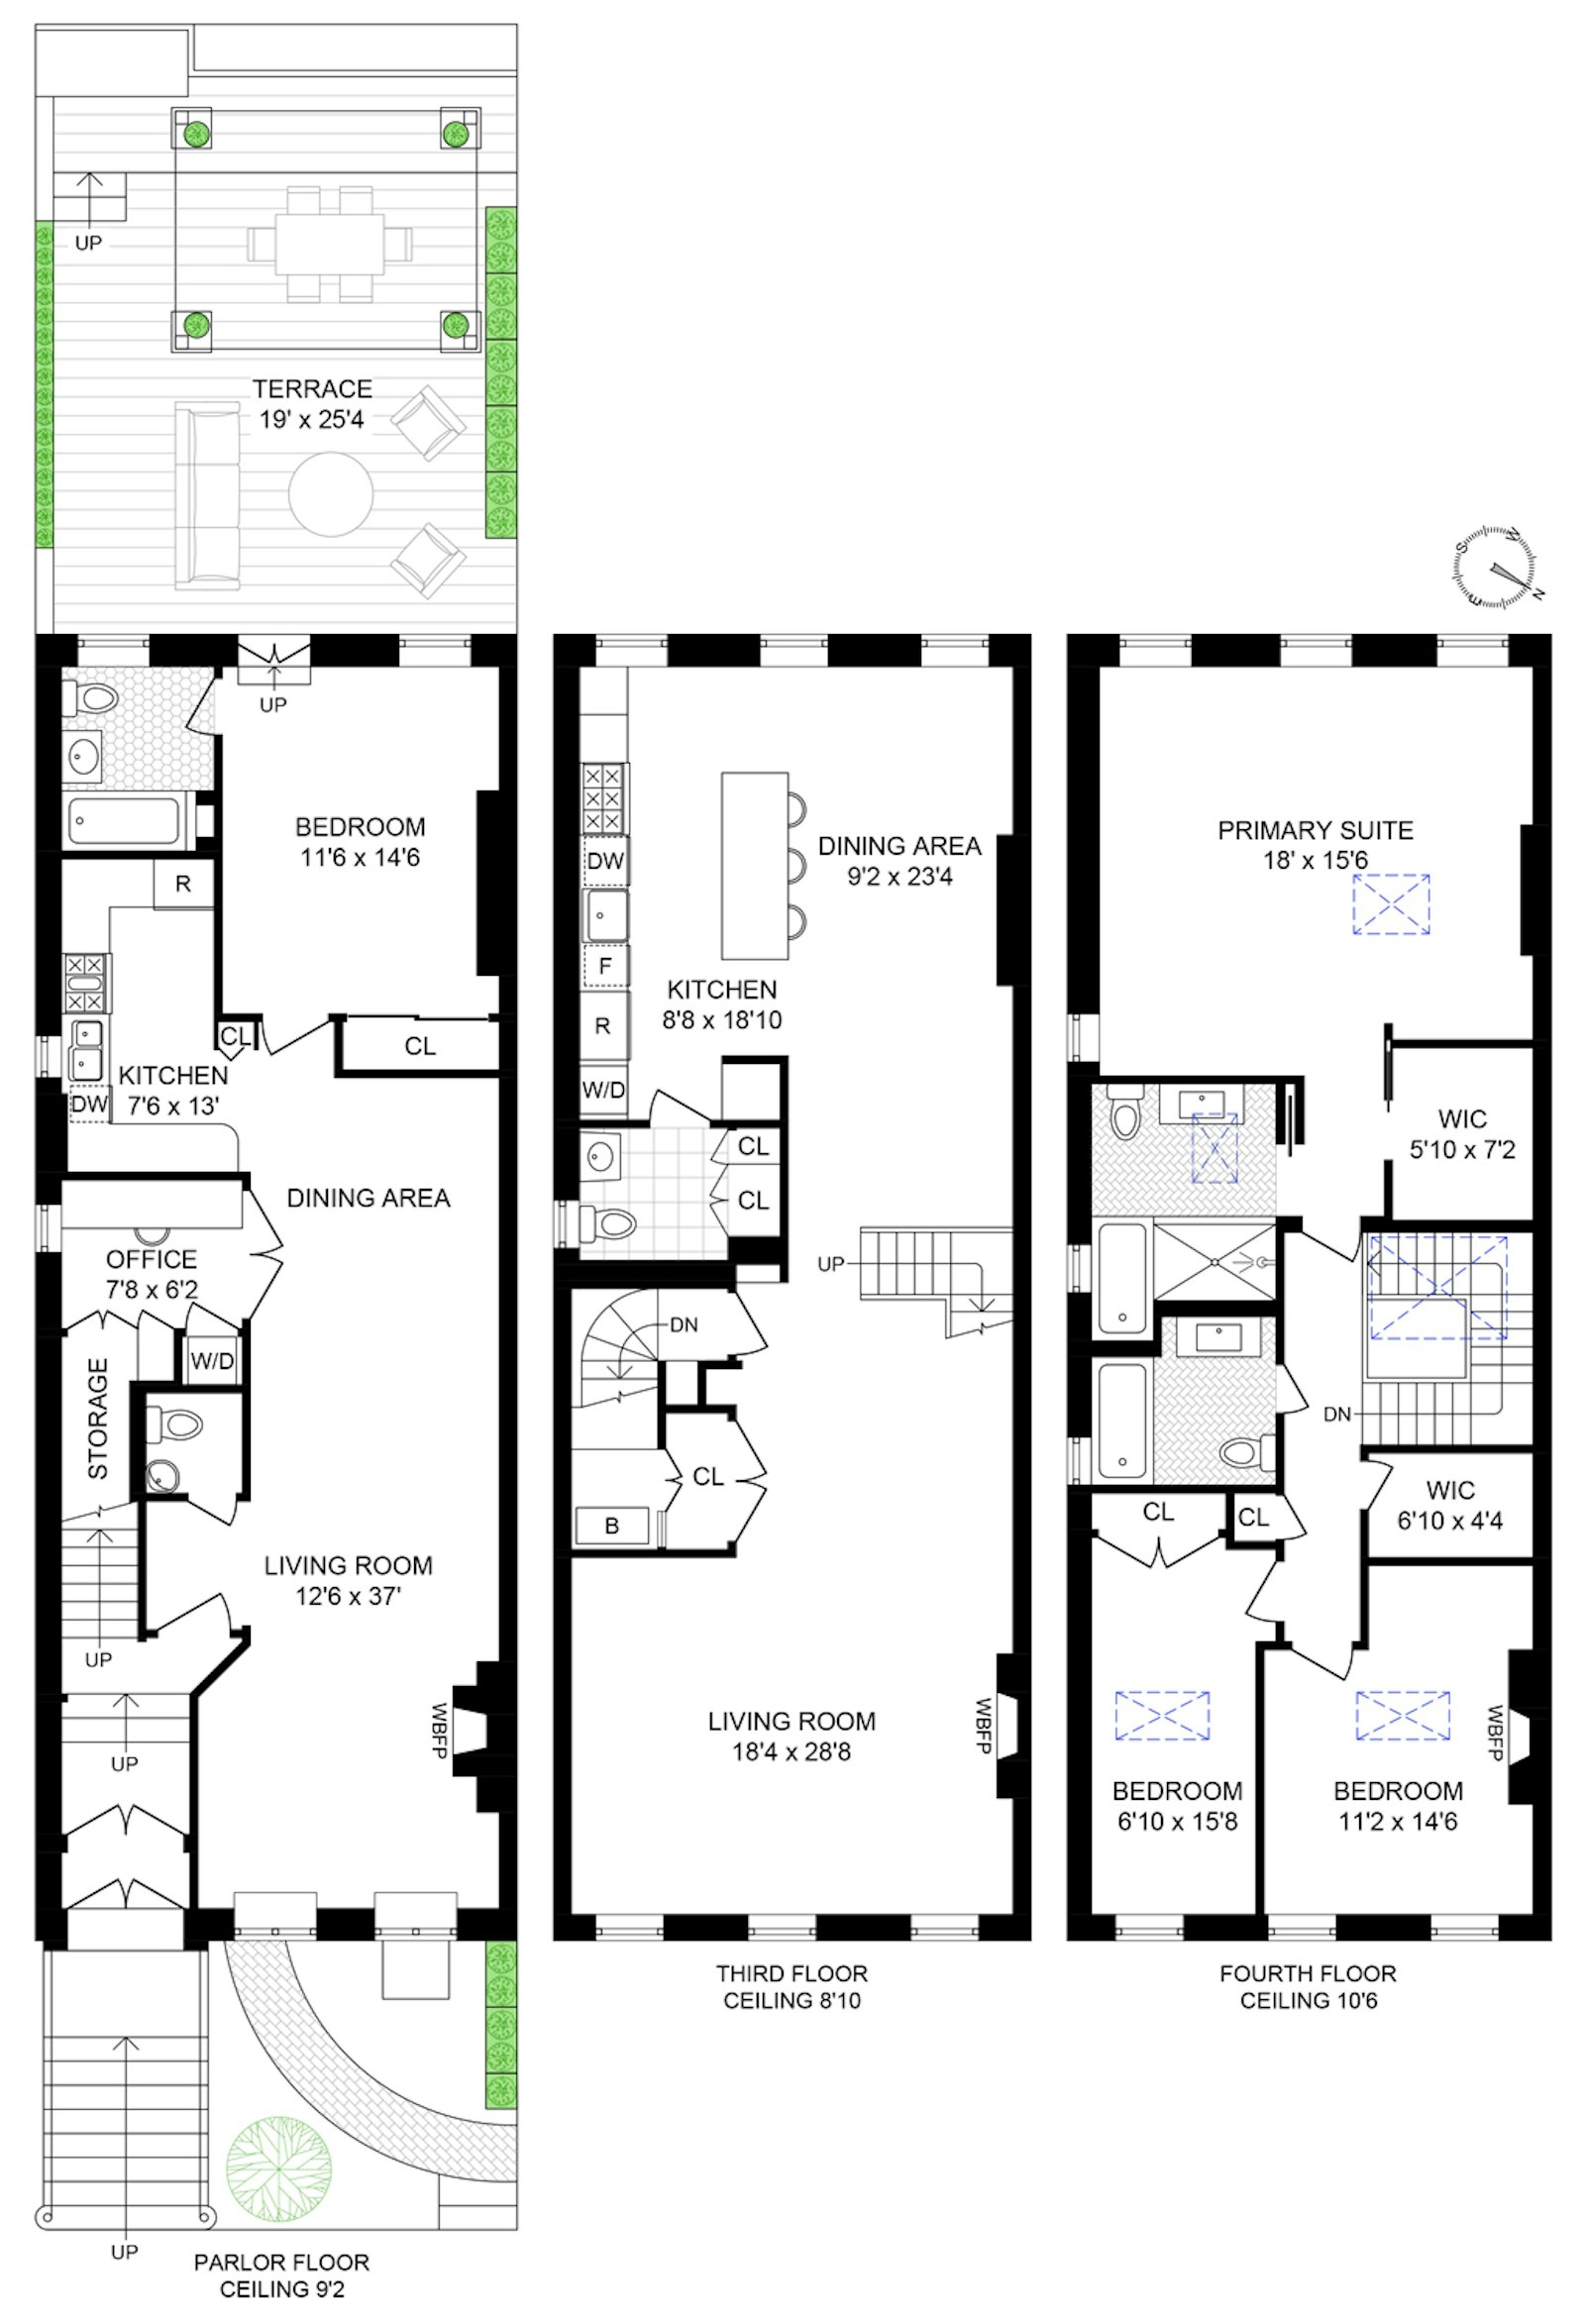 Floorplan for 104 West 13th Street, TRIPLEX